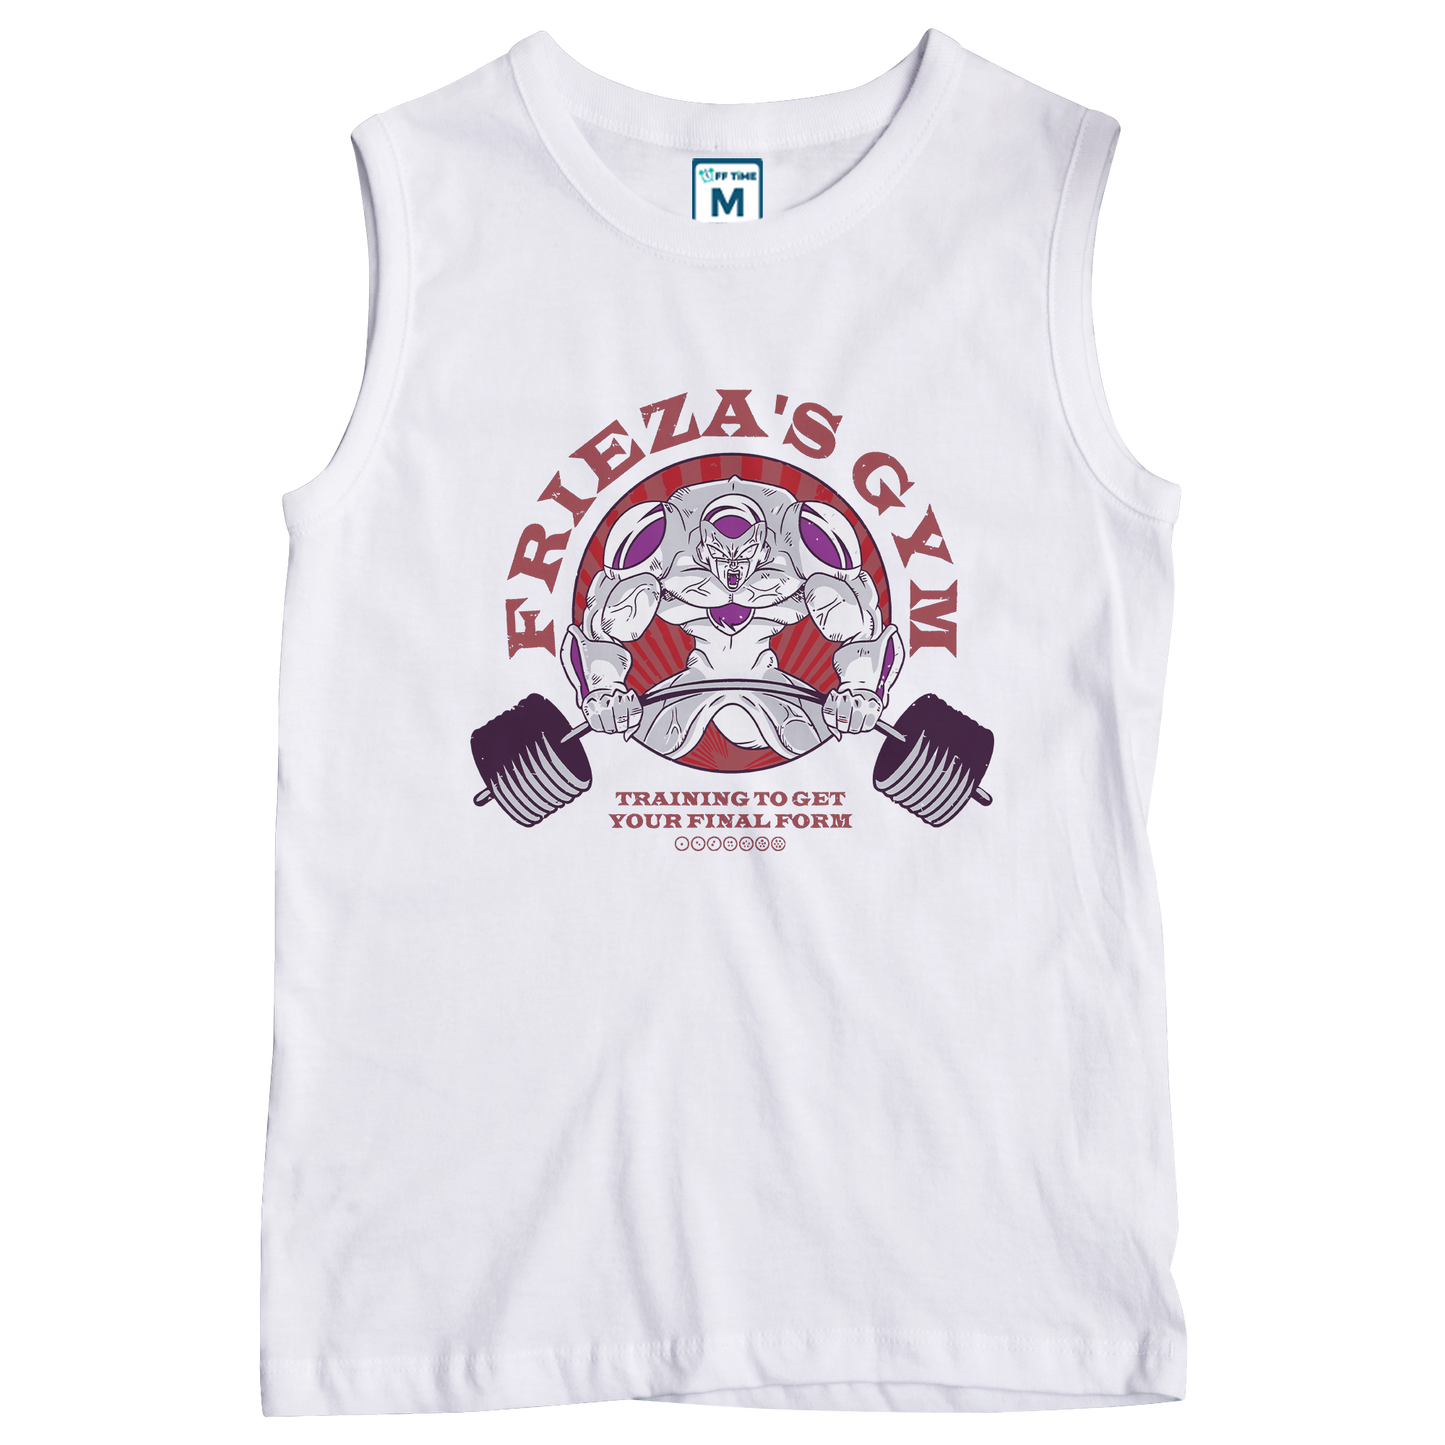 Sleeveless Drifit Shirt: Friezas Gym